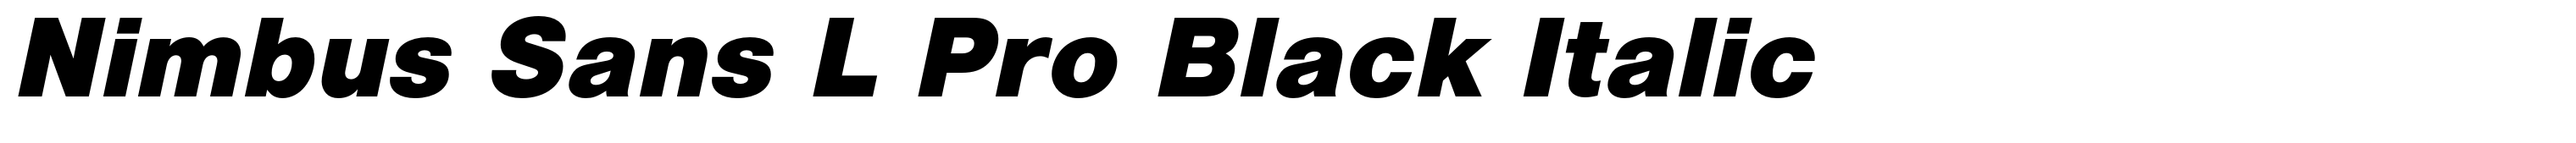 Nimbus Sans L Pro Black Italic